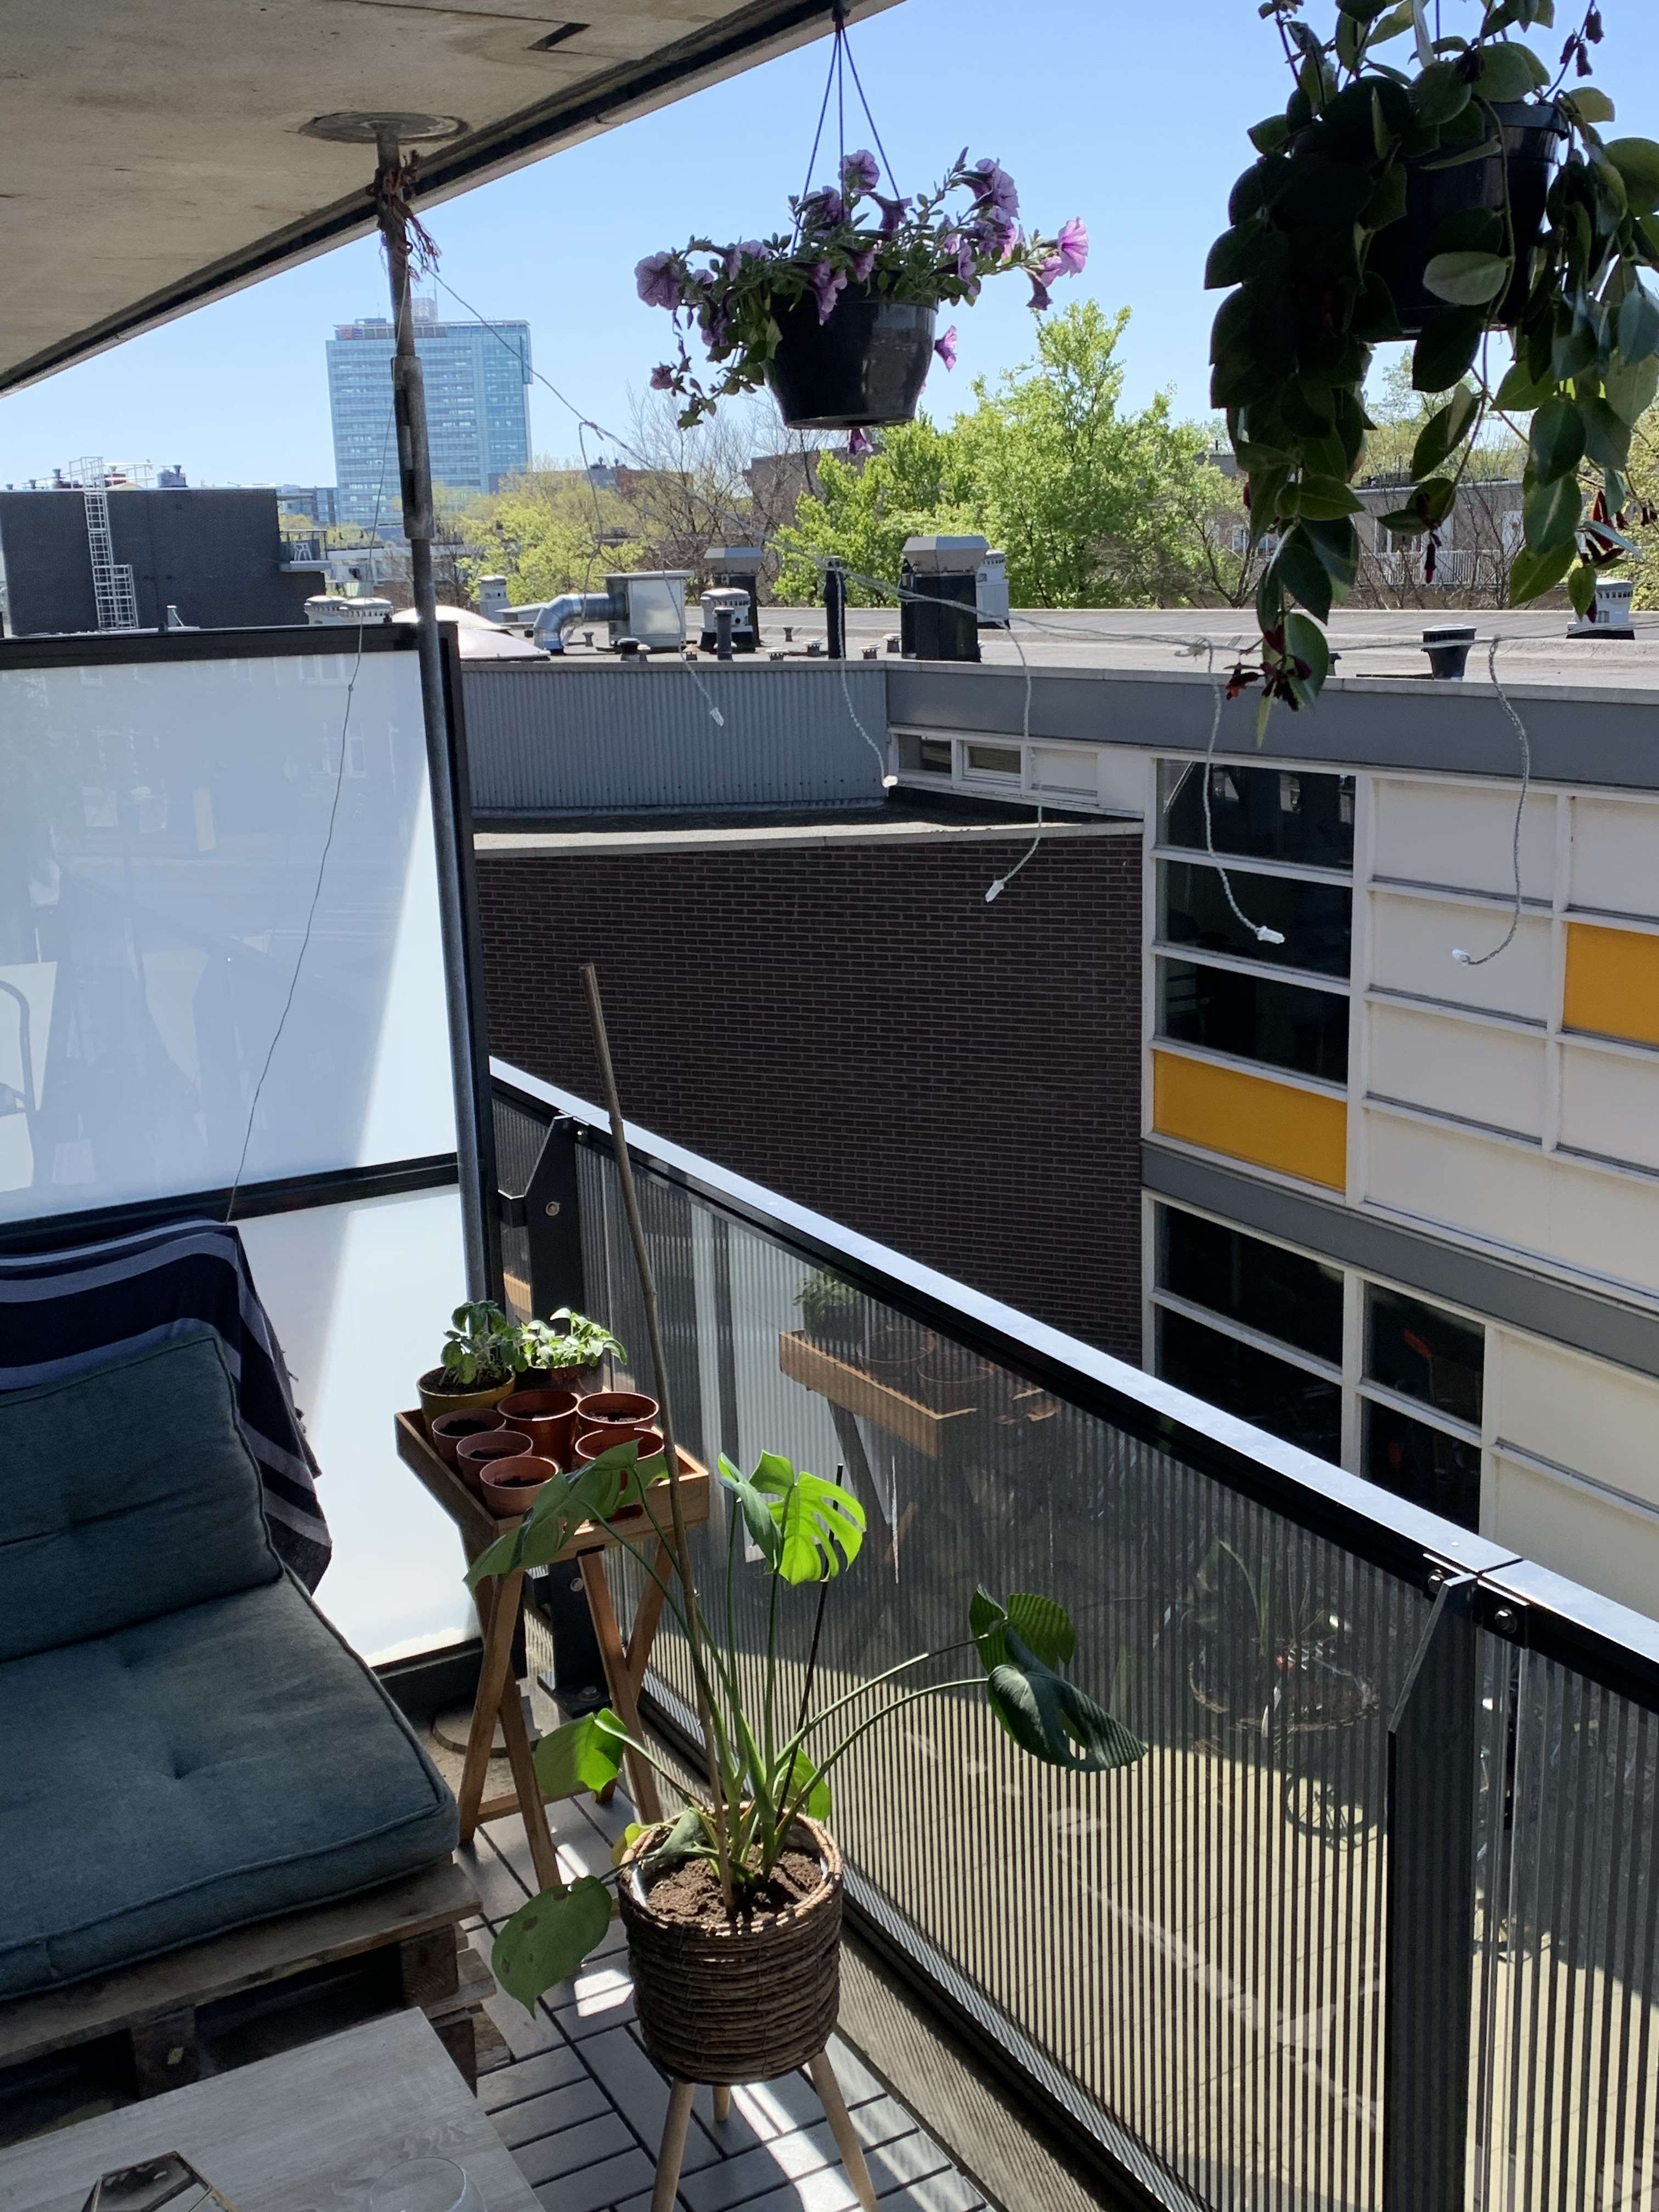 Balcony with plants